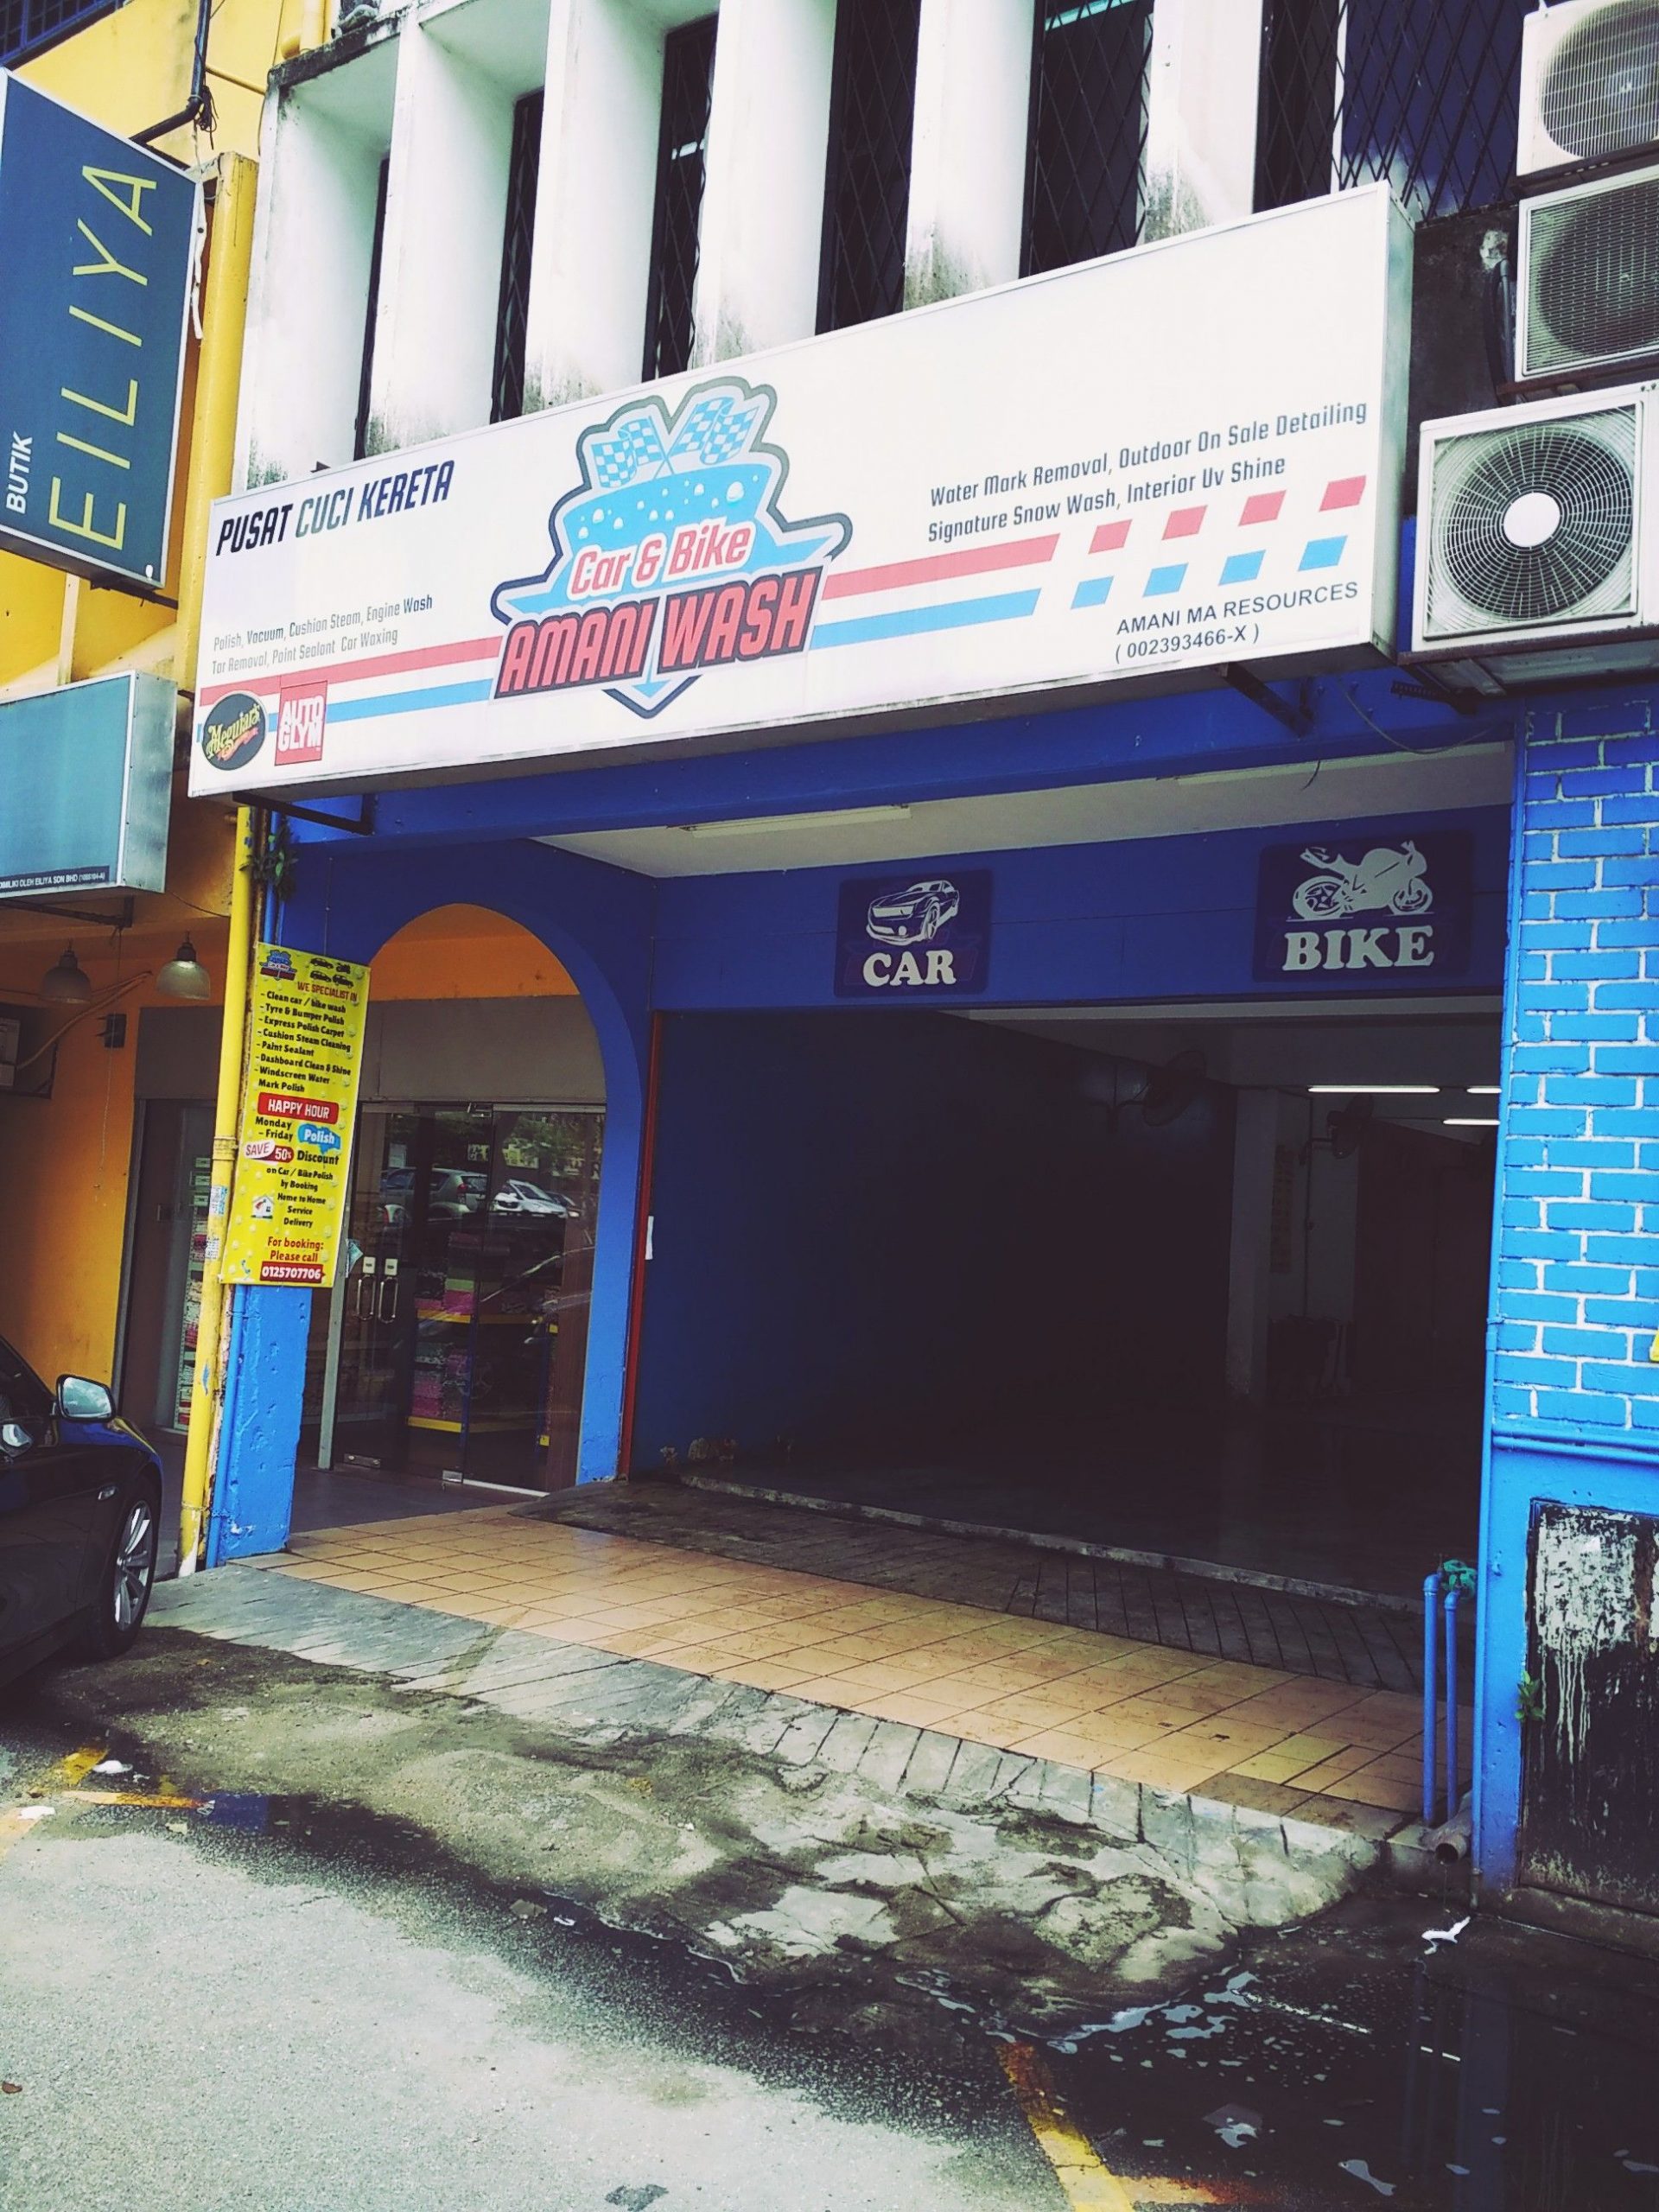 Car Wash Business For Sale Malaysia - Edukasi News - Small Business For Sale In Malaysia